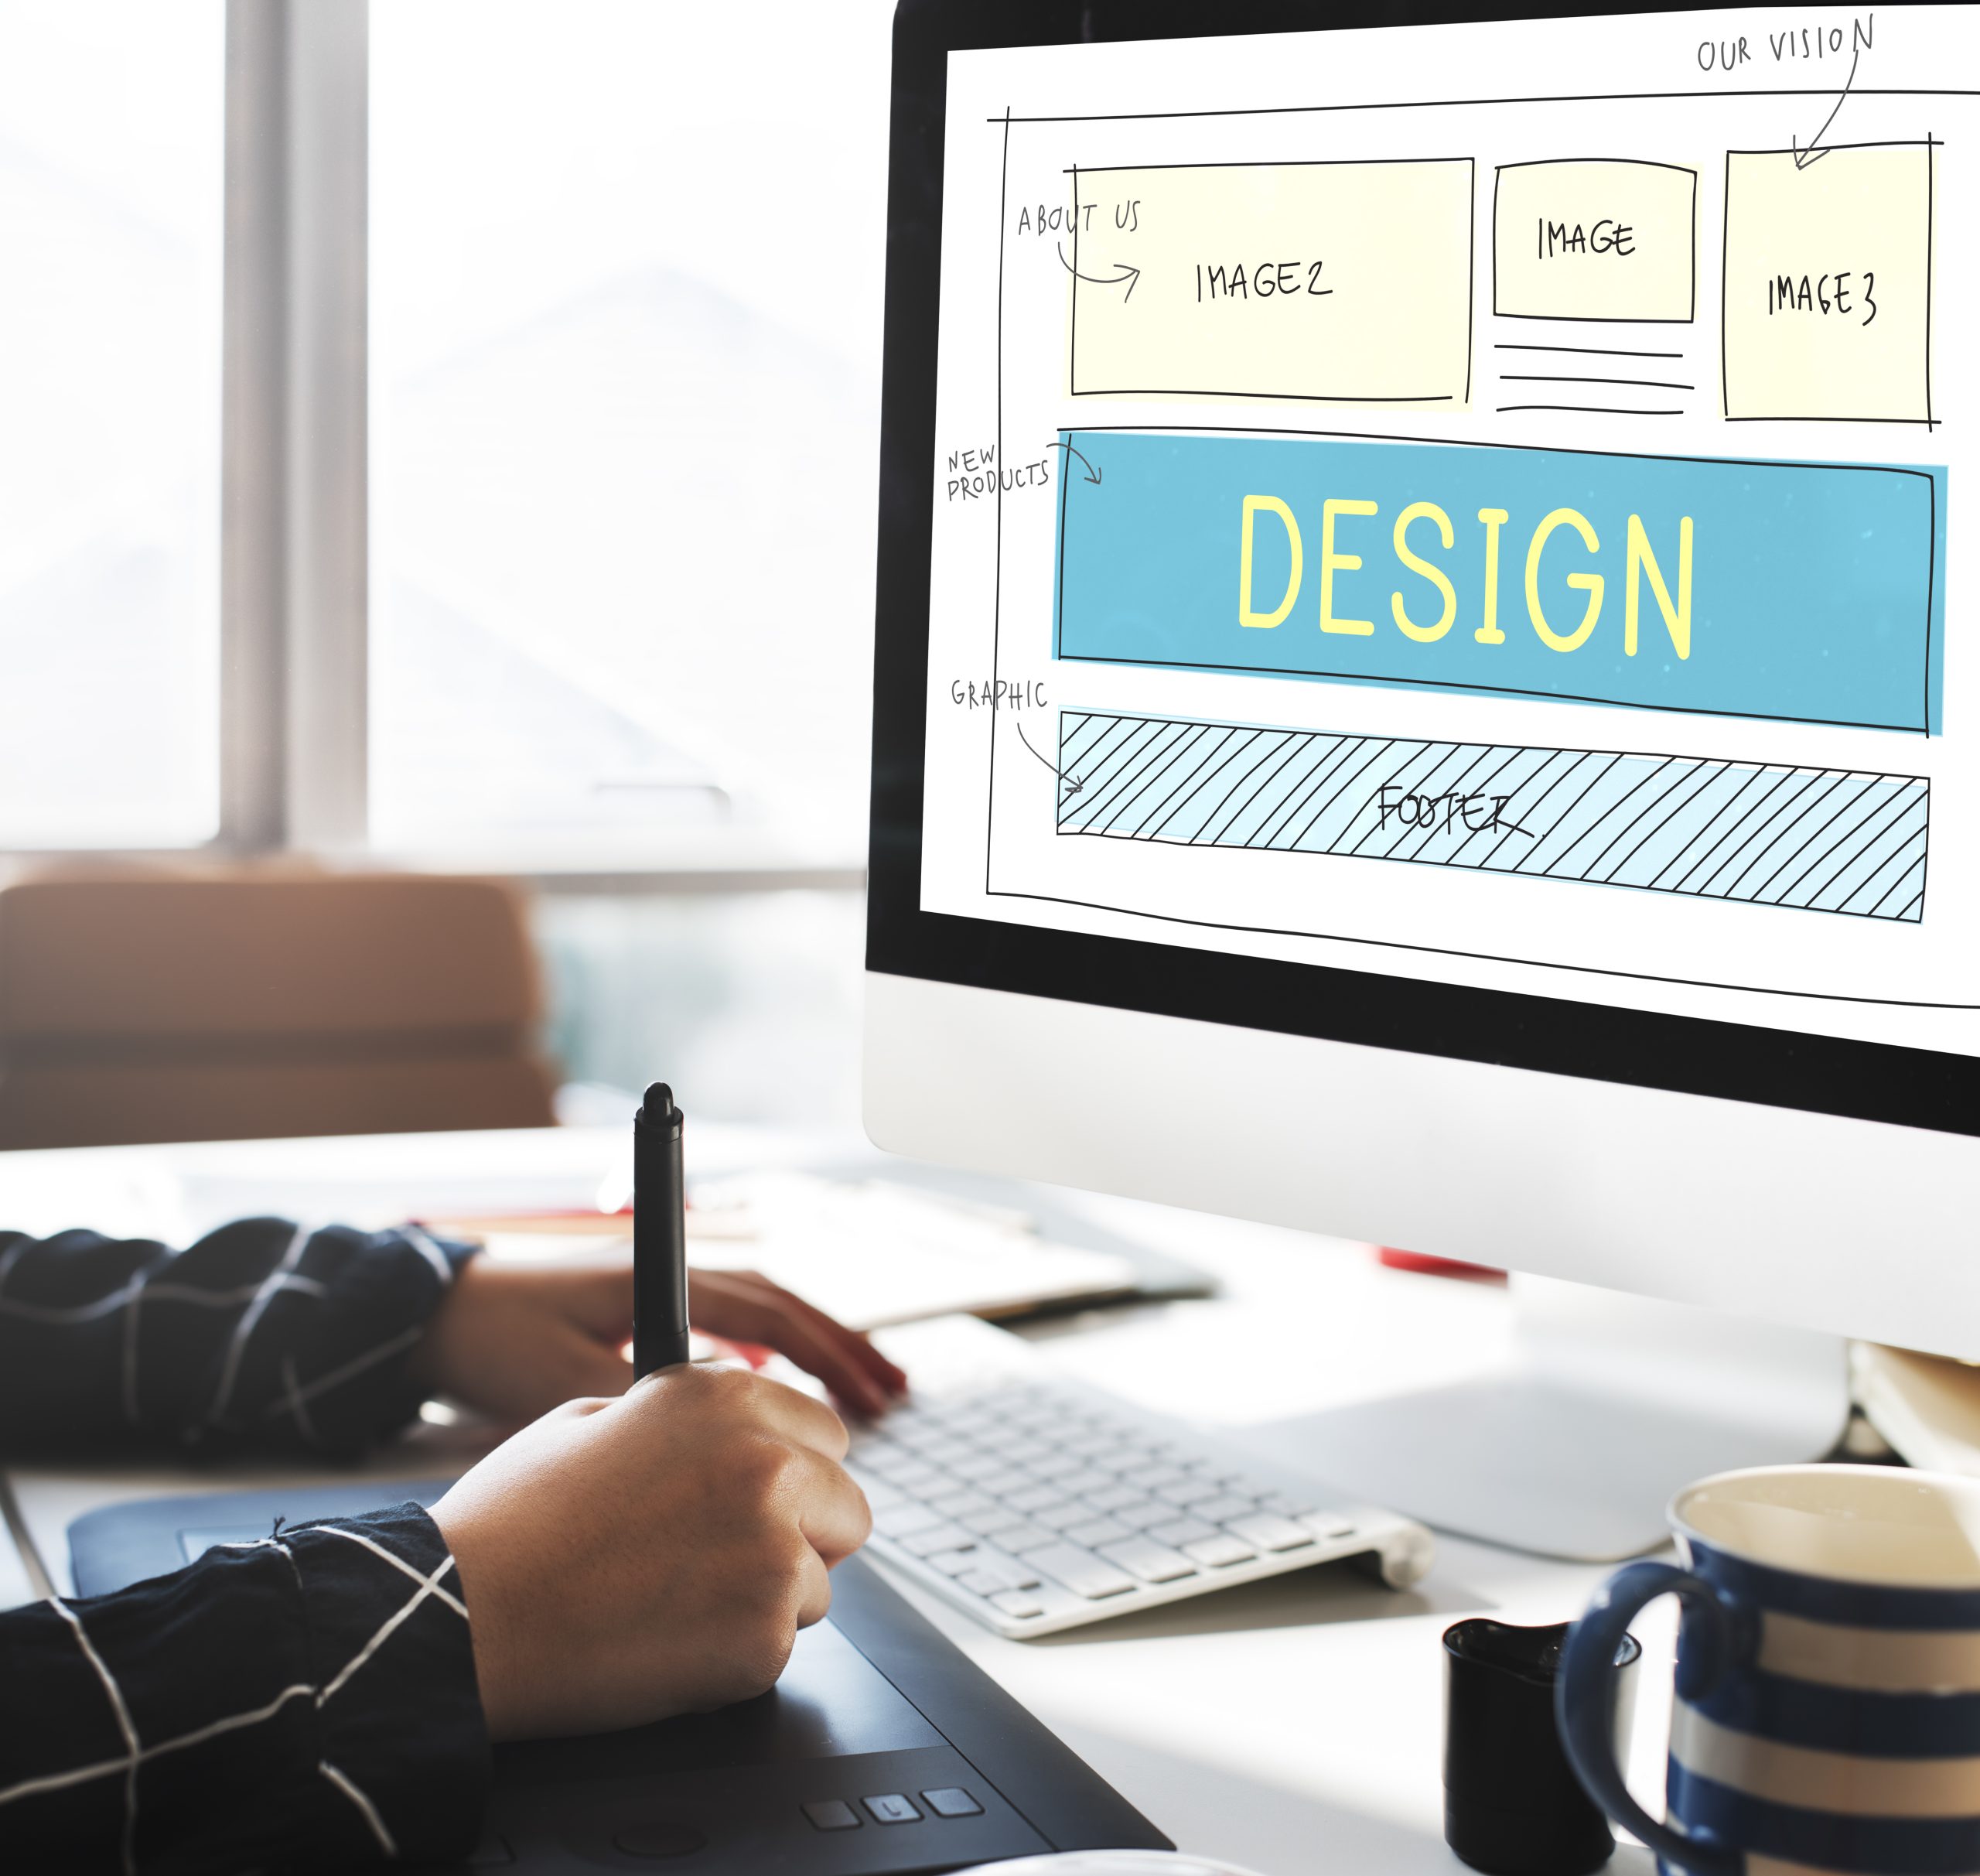 Swonie Creative Design - Elevate Your Business with Swonie Creative Design: Create an Impactful Website!